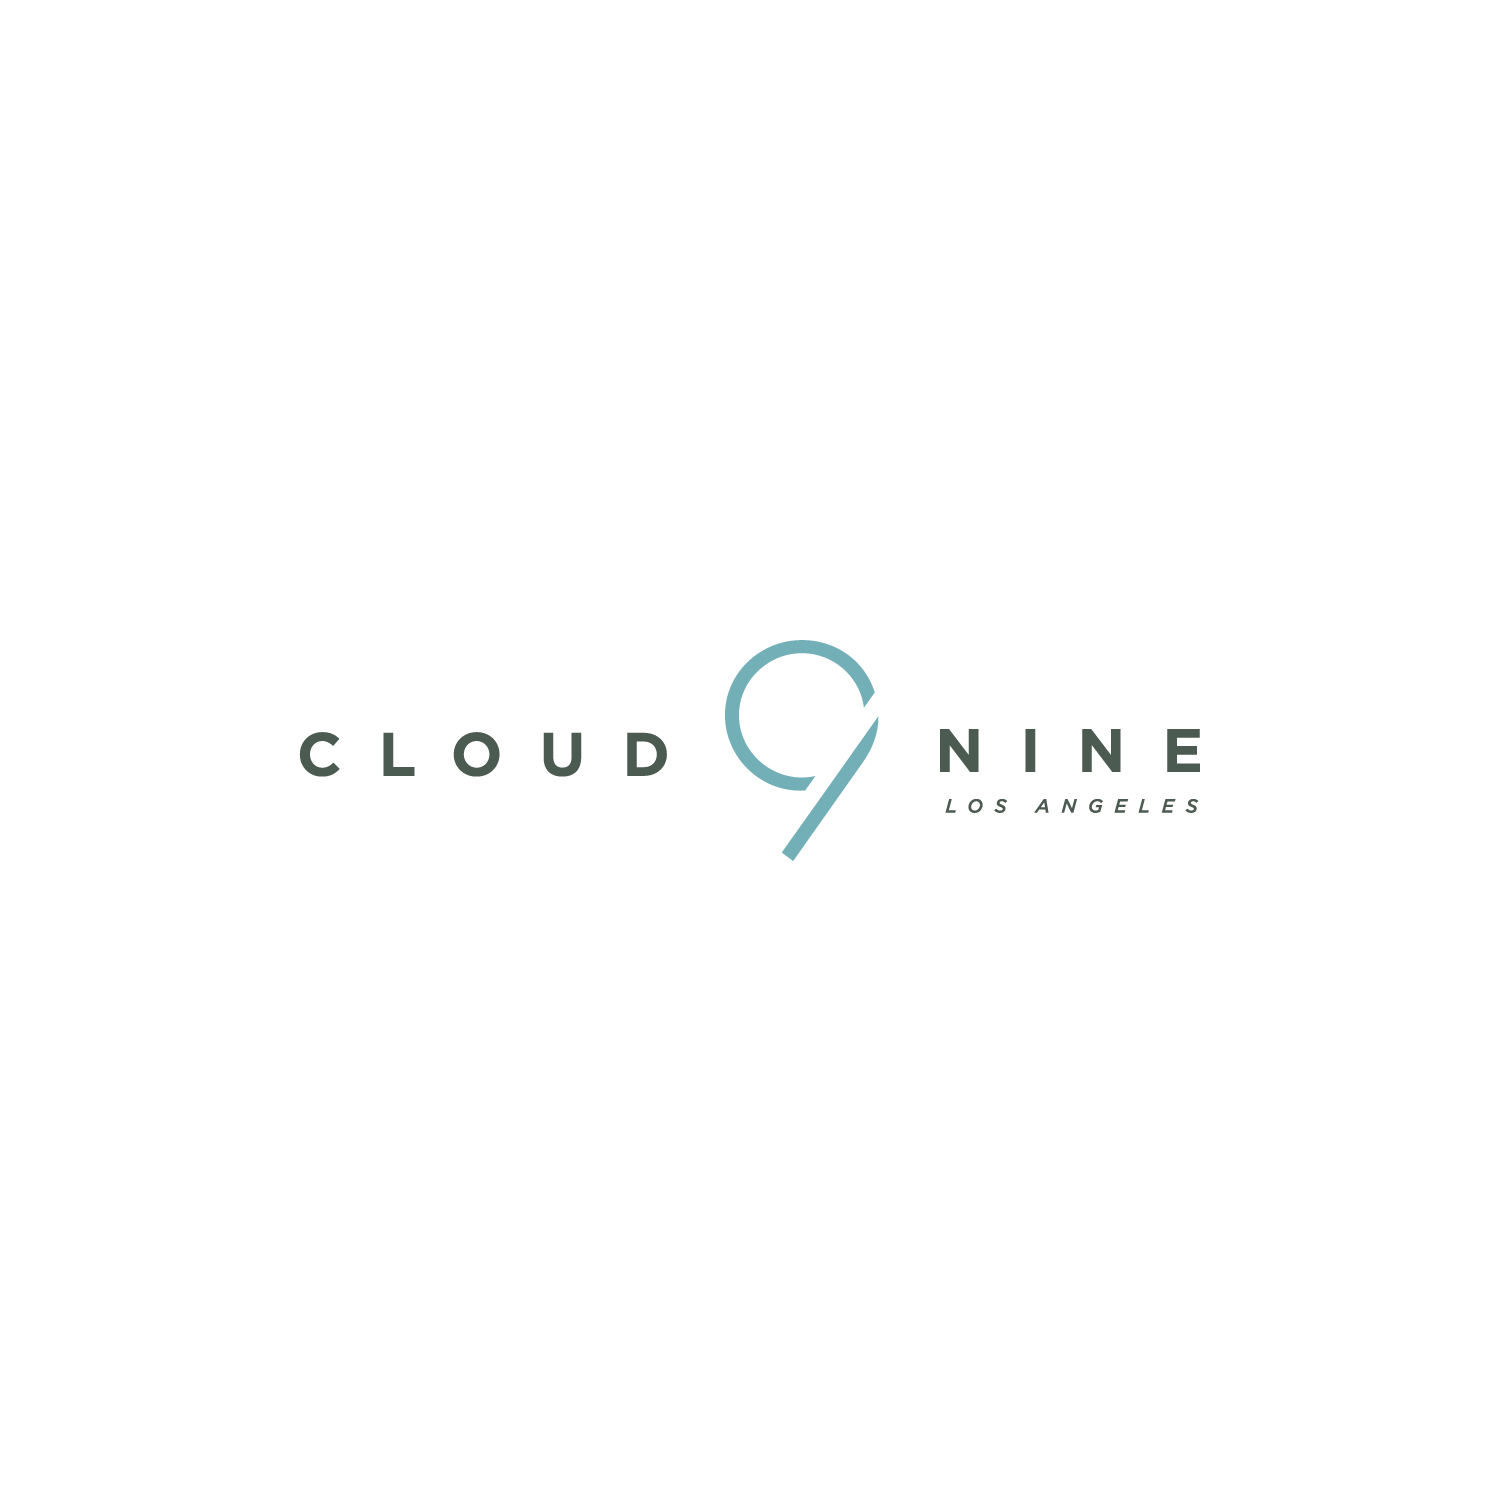 Cloud 9 logo by OLSON MCINTYRE